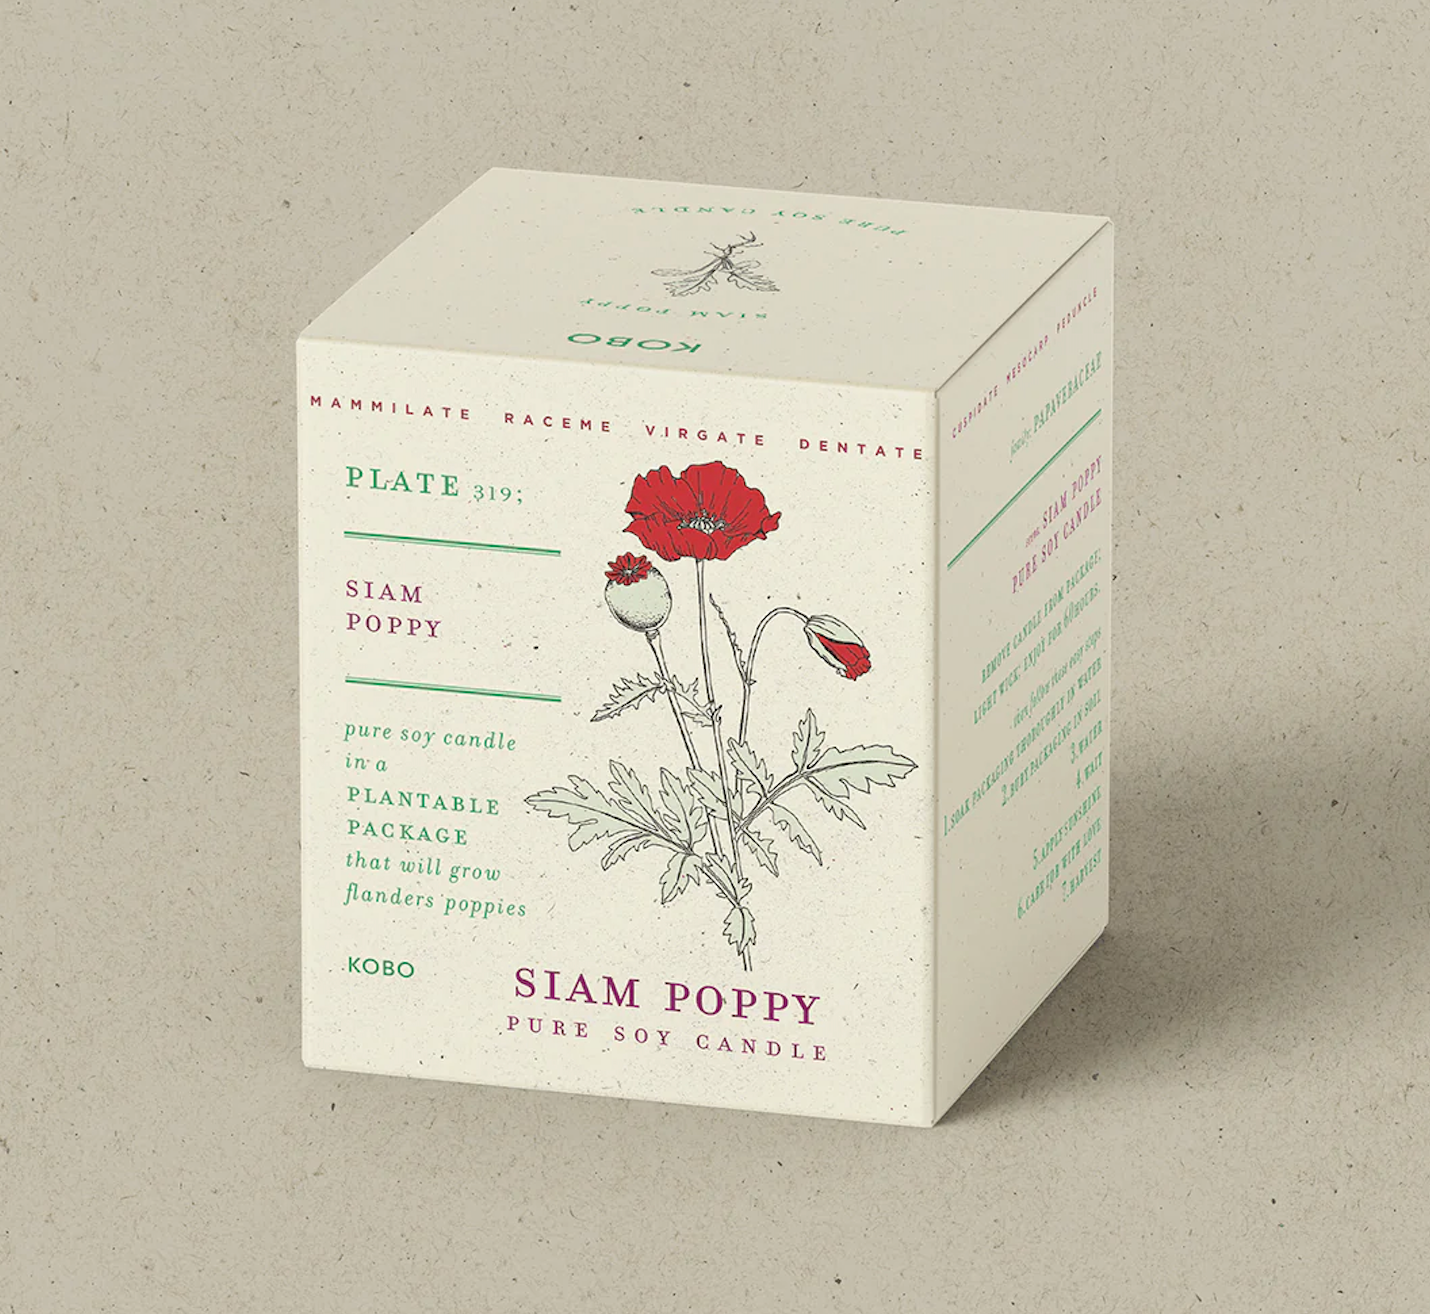 Kobo Siam Poppy plant the box 9oz candle